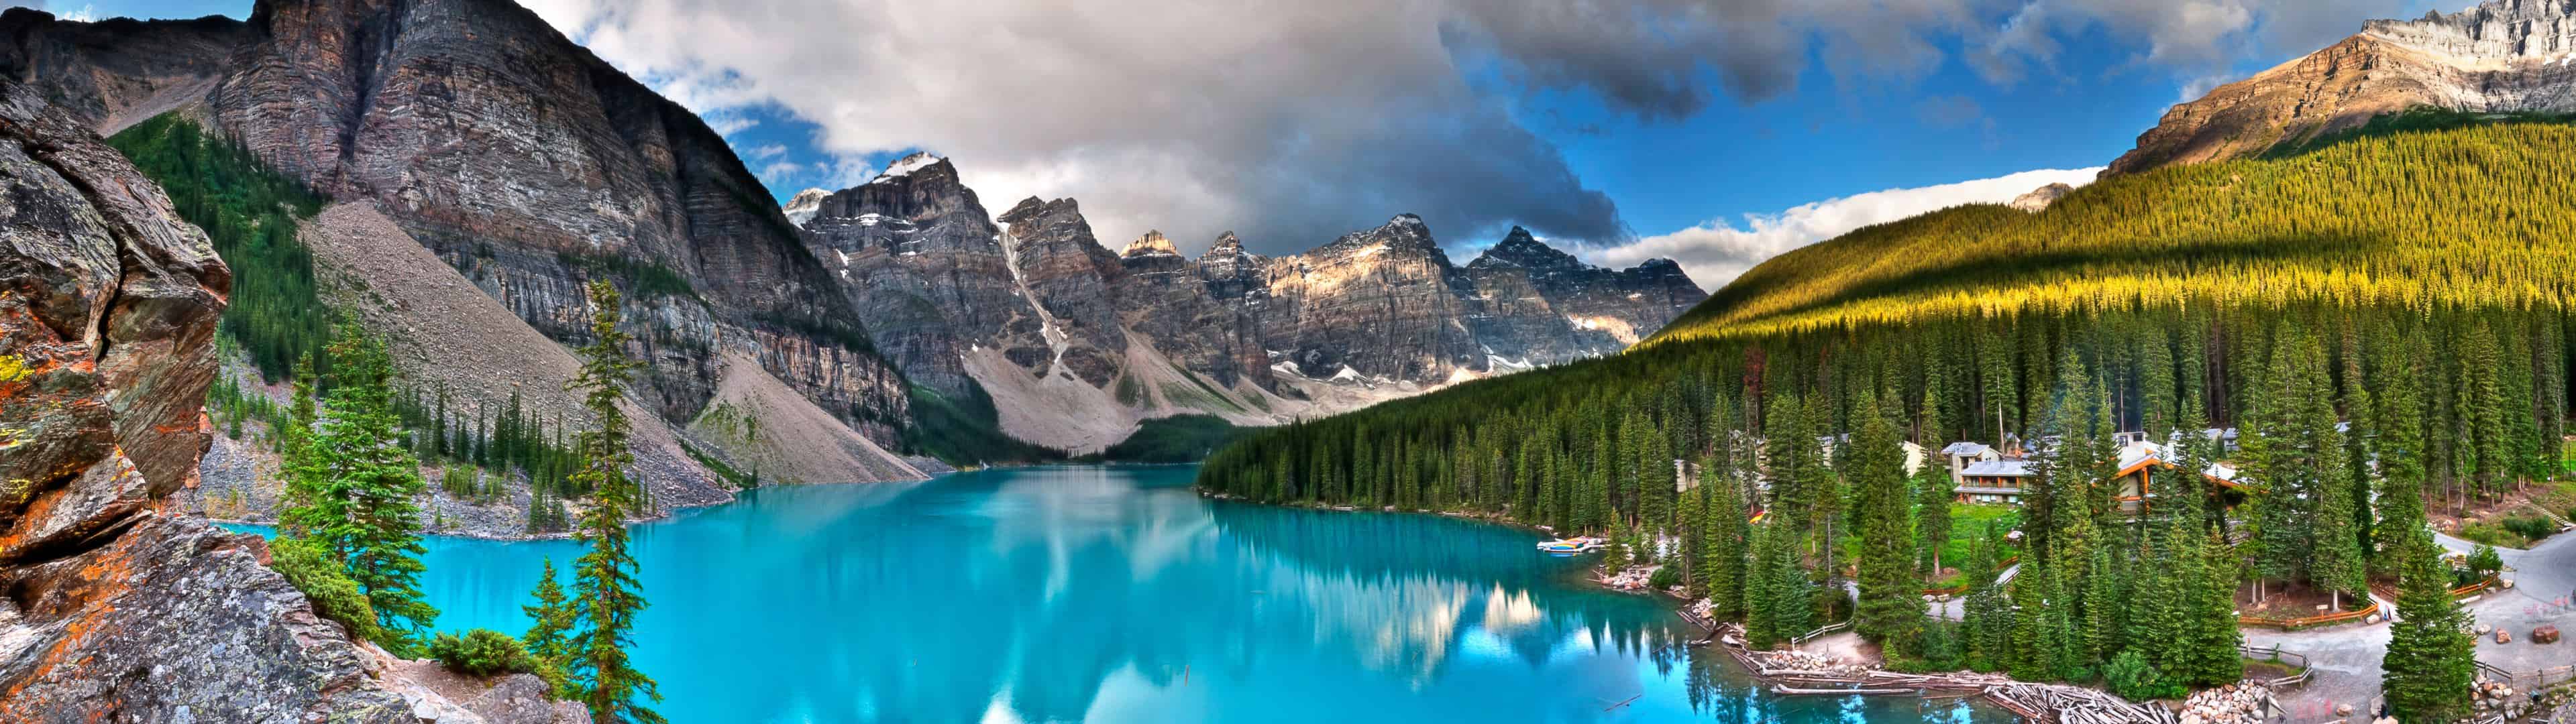 Moraine Lake Banff National Park Canada .pixelz.cc